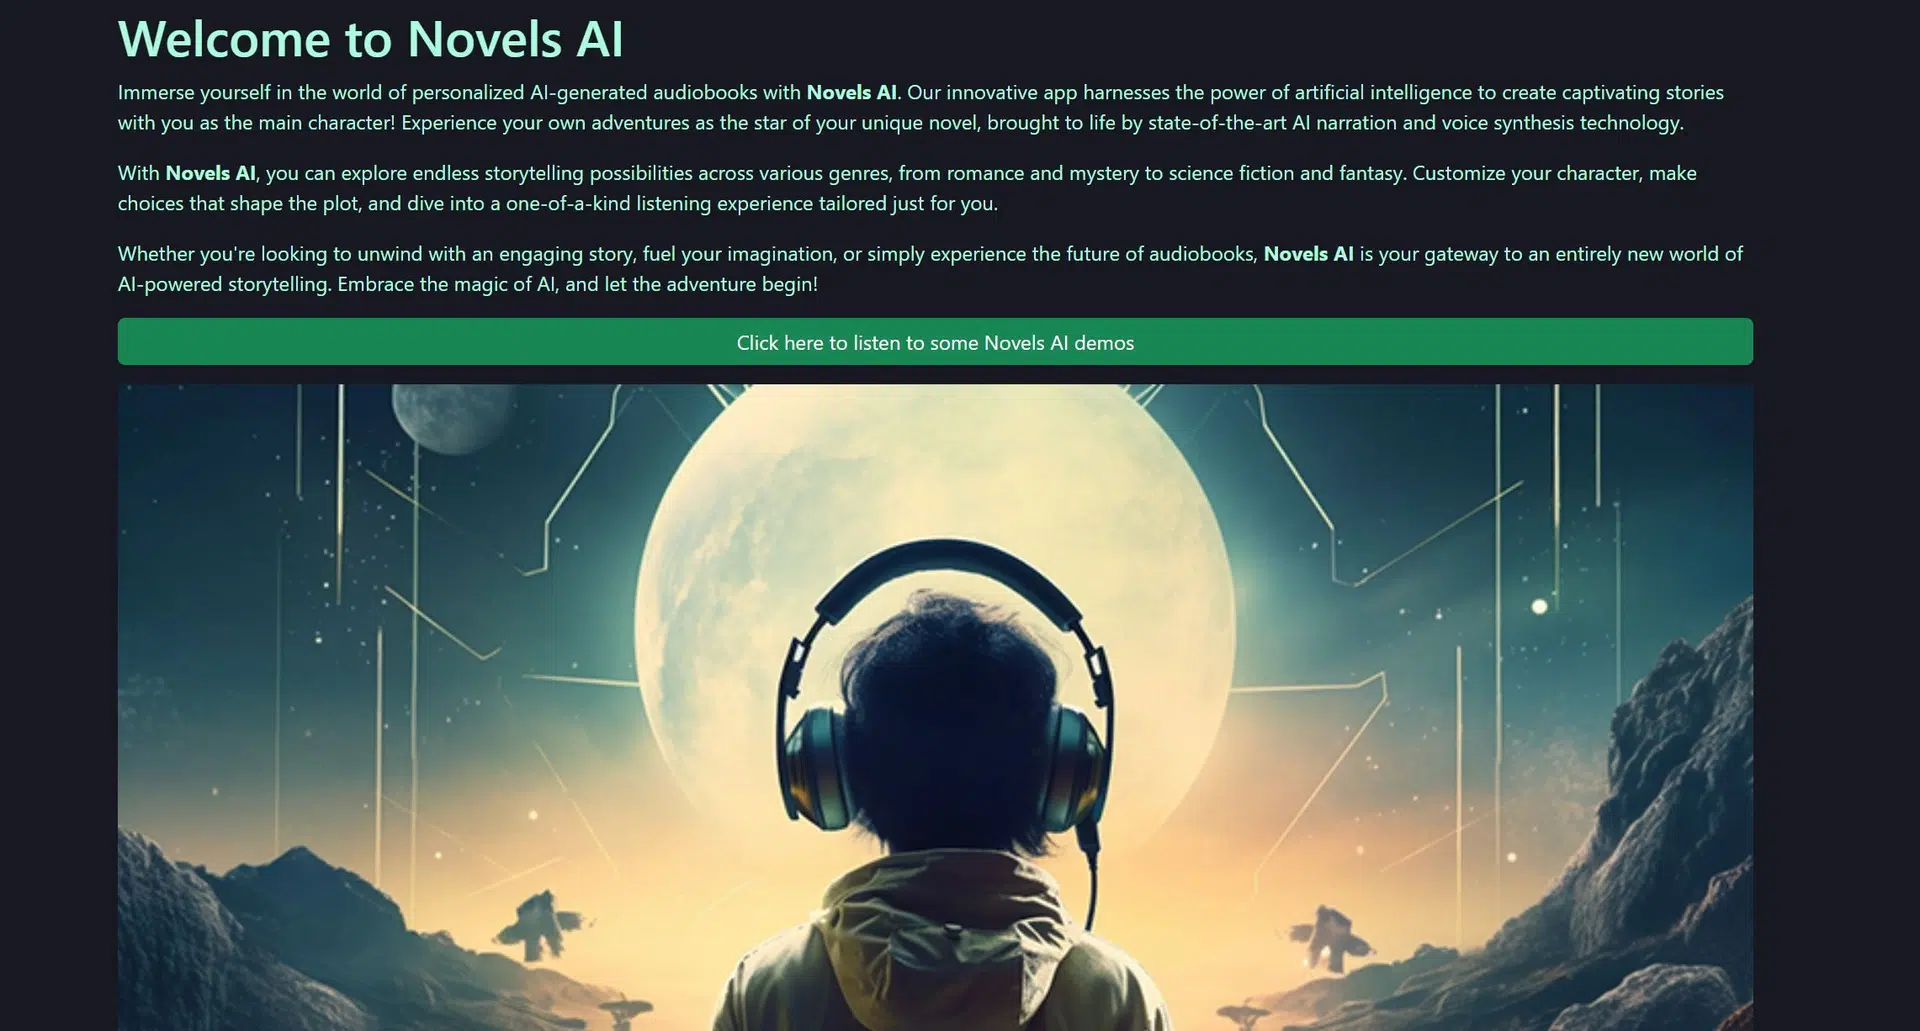 Novels AIwebsite picture